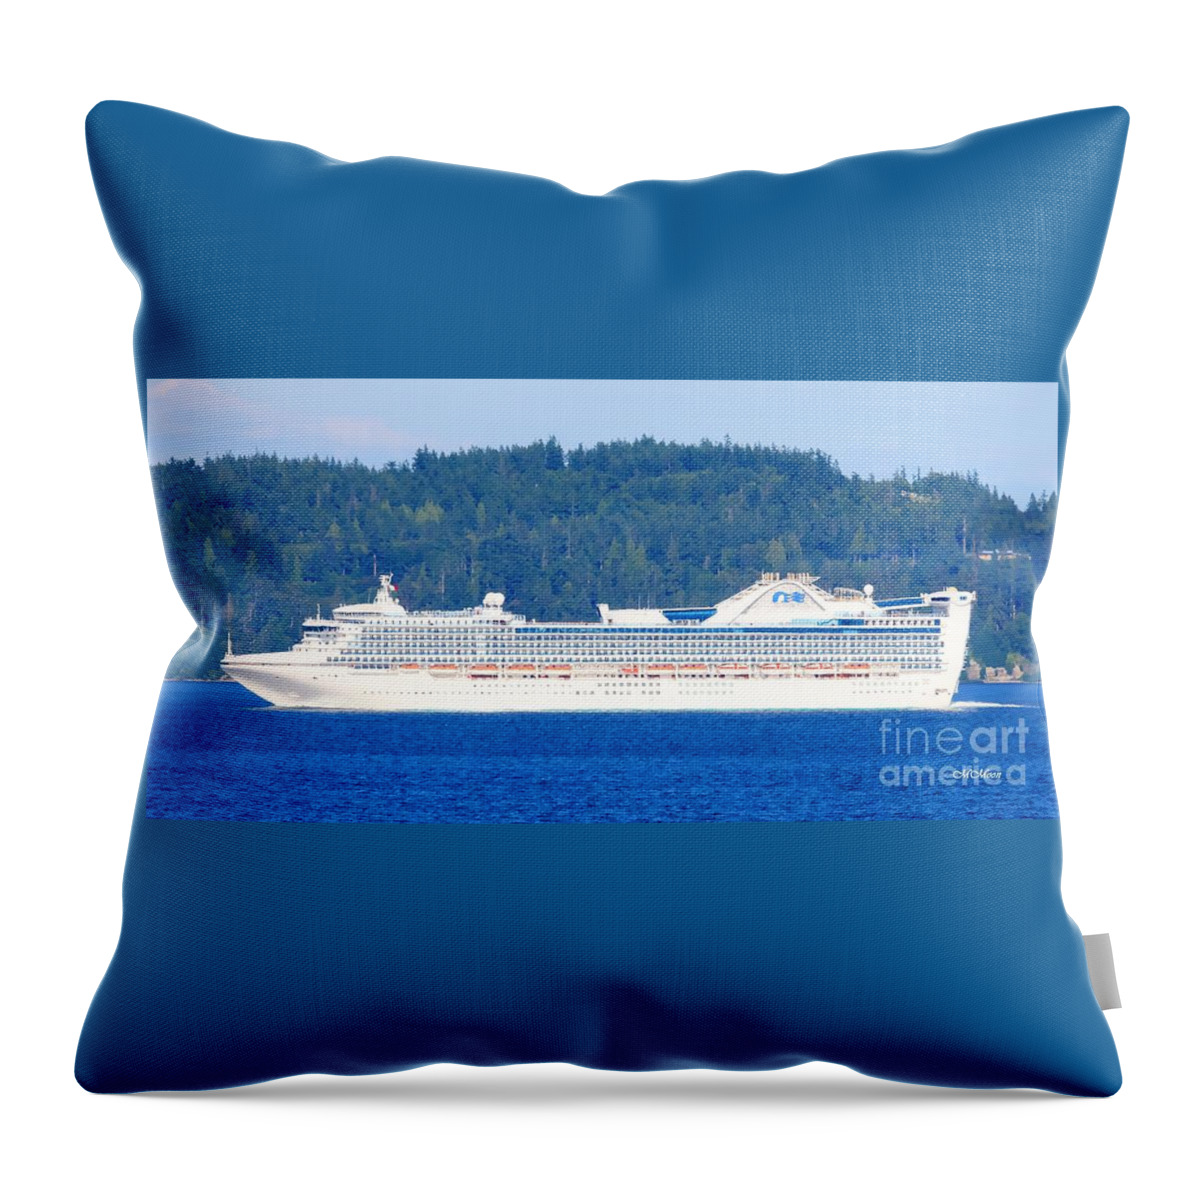 Princess Cruise Ship Throw Pillow featuring the photograph Princess Cruise Ship by Tap On Photo